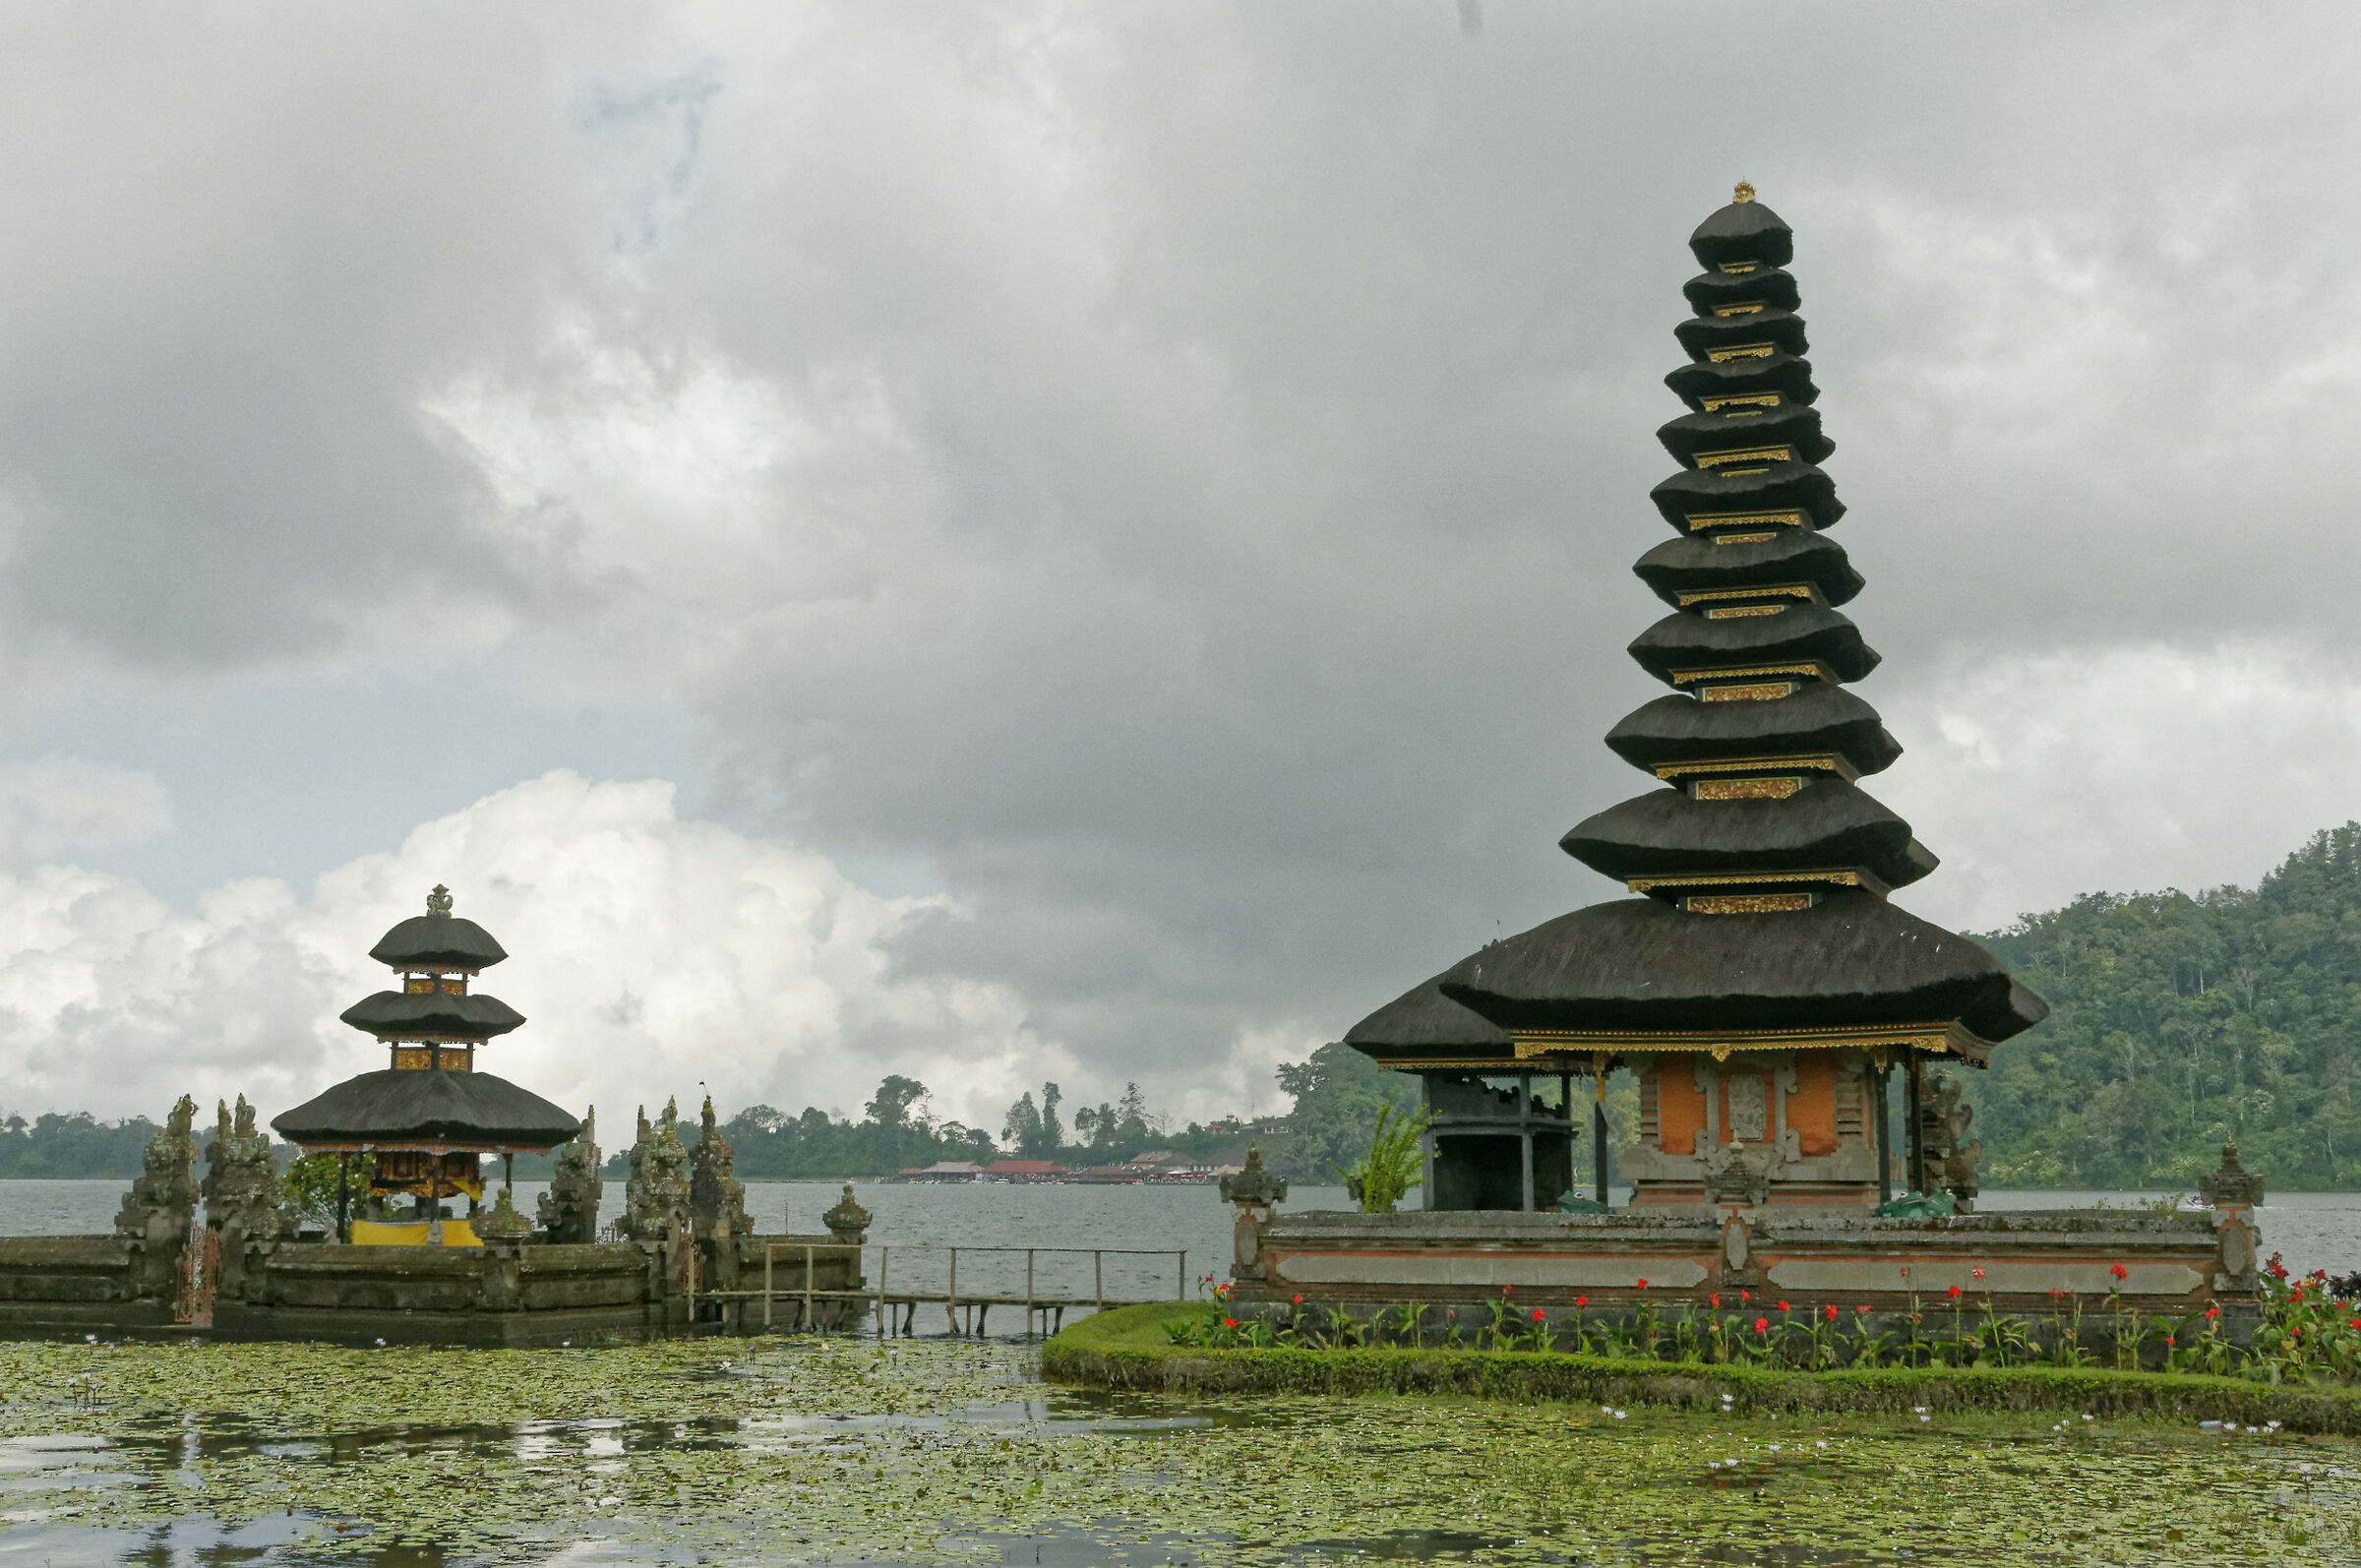 Temple in Bali...